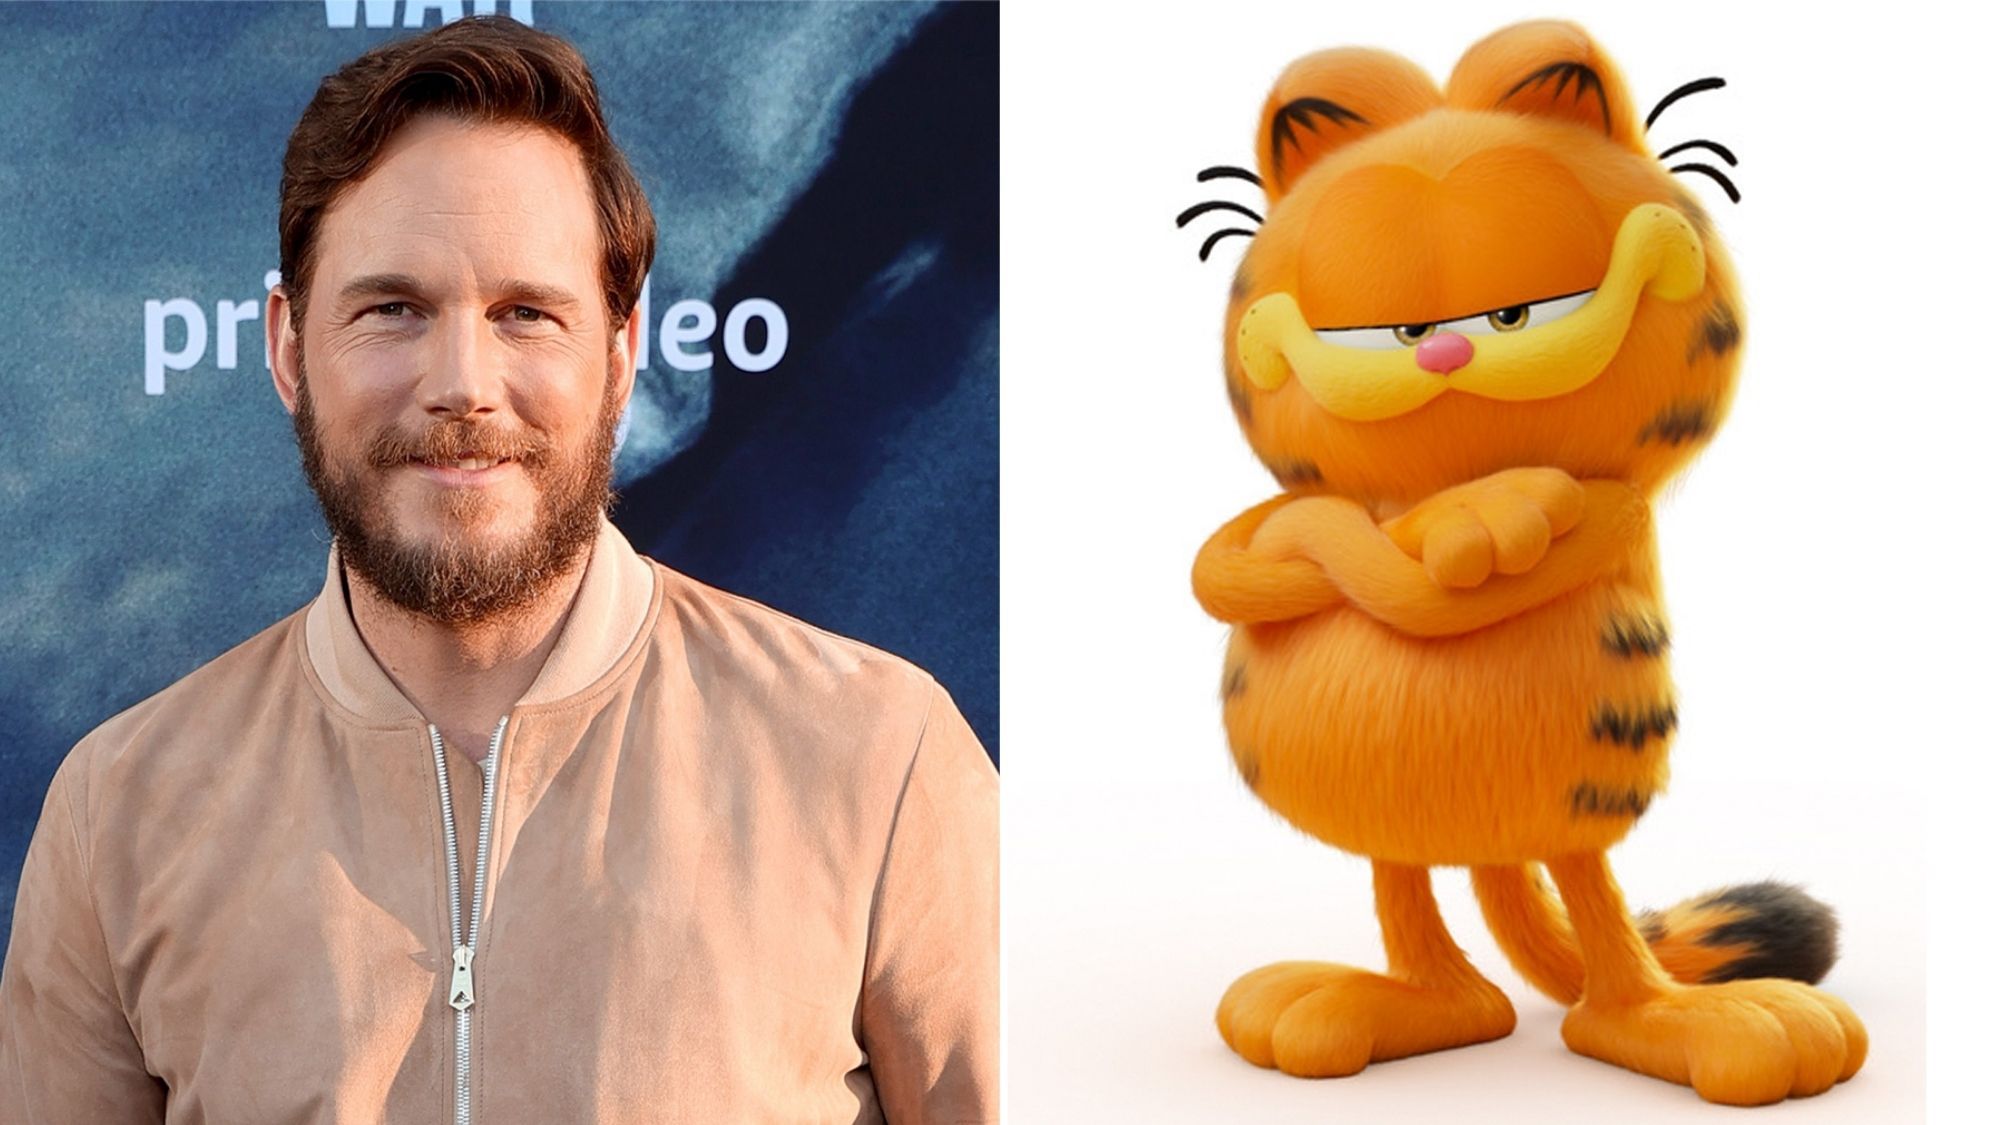 Chris Pratt to voice Garfield in upcoming animated movie photo people.com